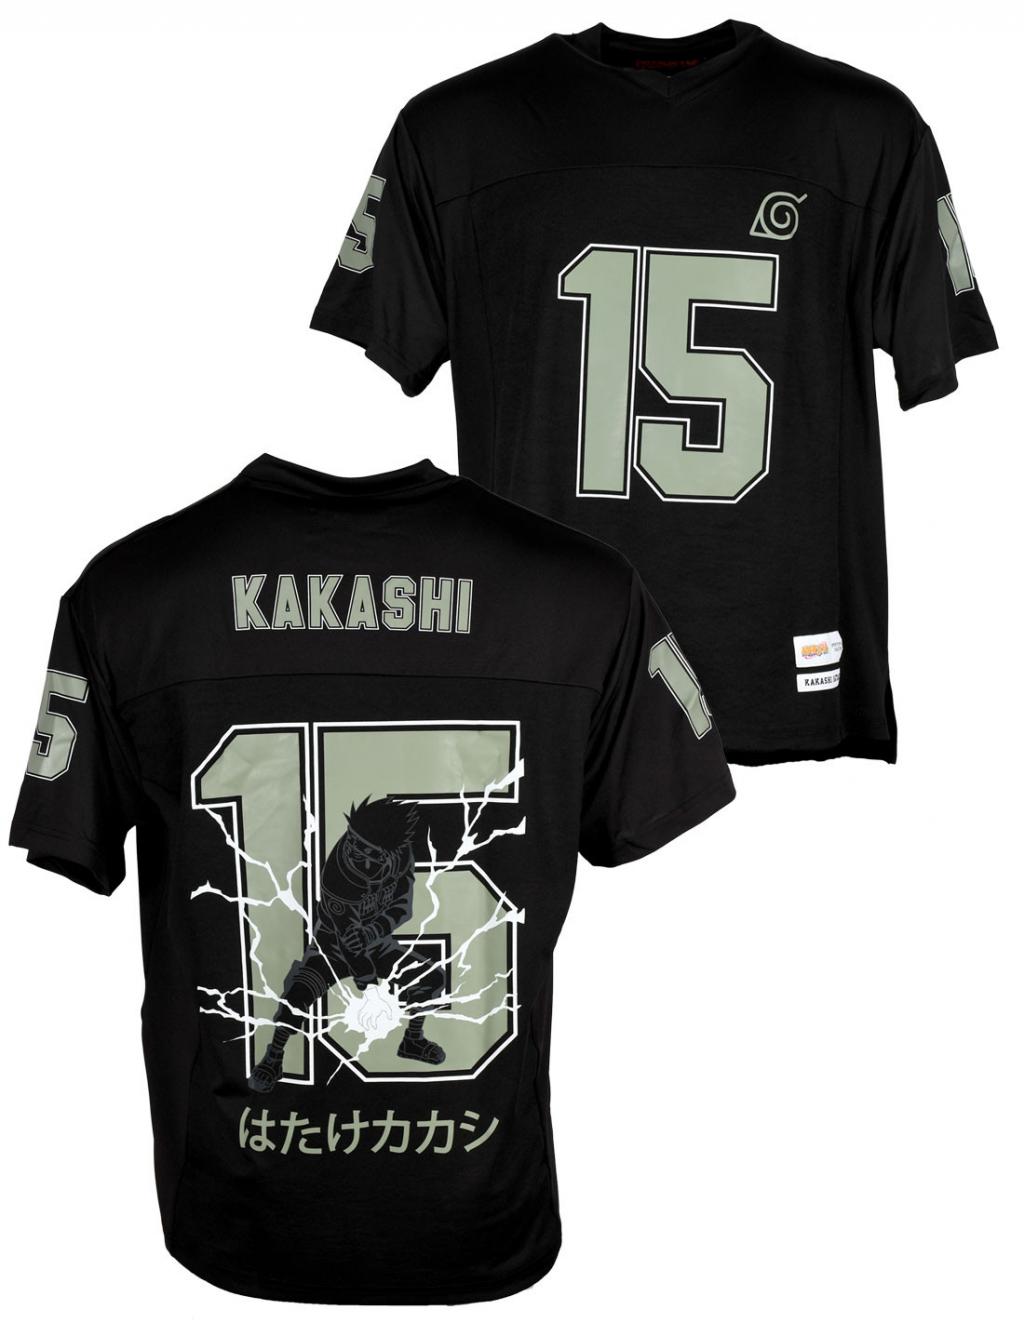 NARUTO - Kakashi - T-Shirt Sports US Replica unisex (XL)